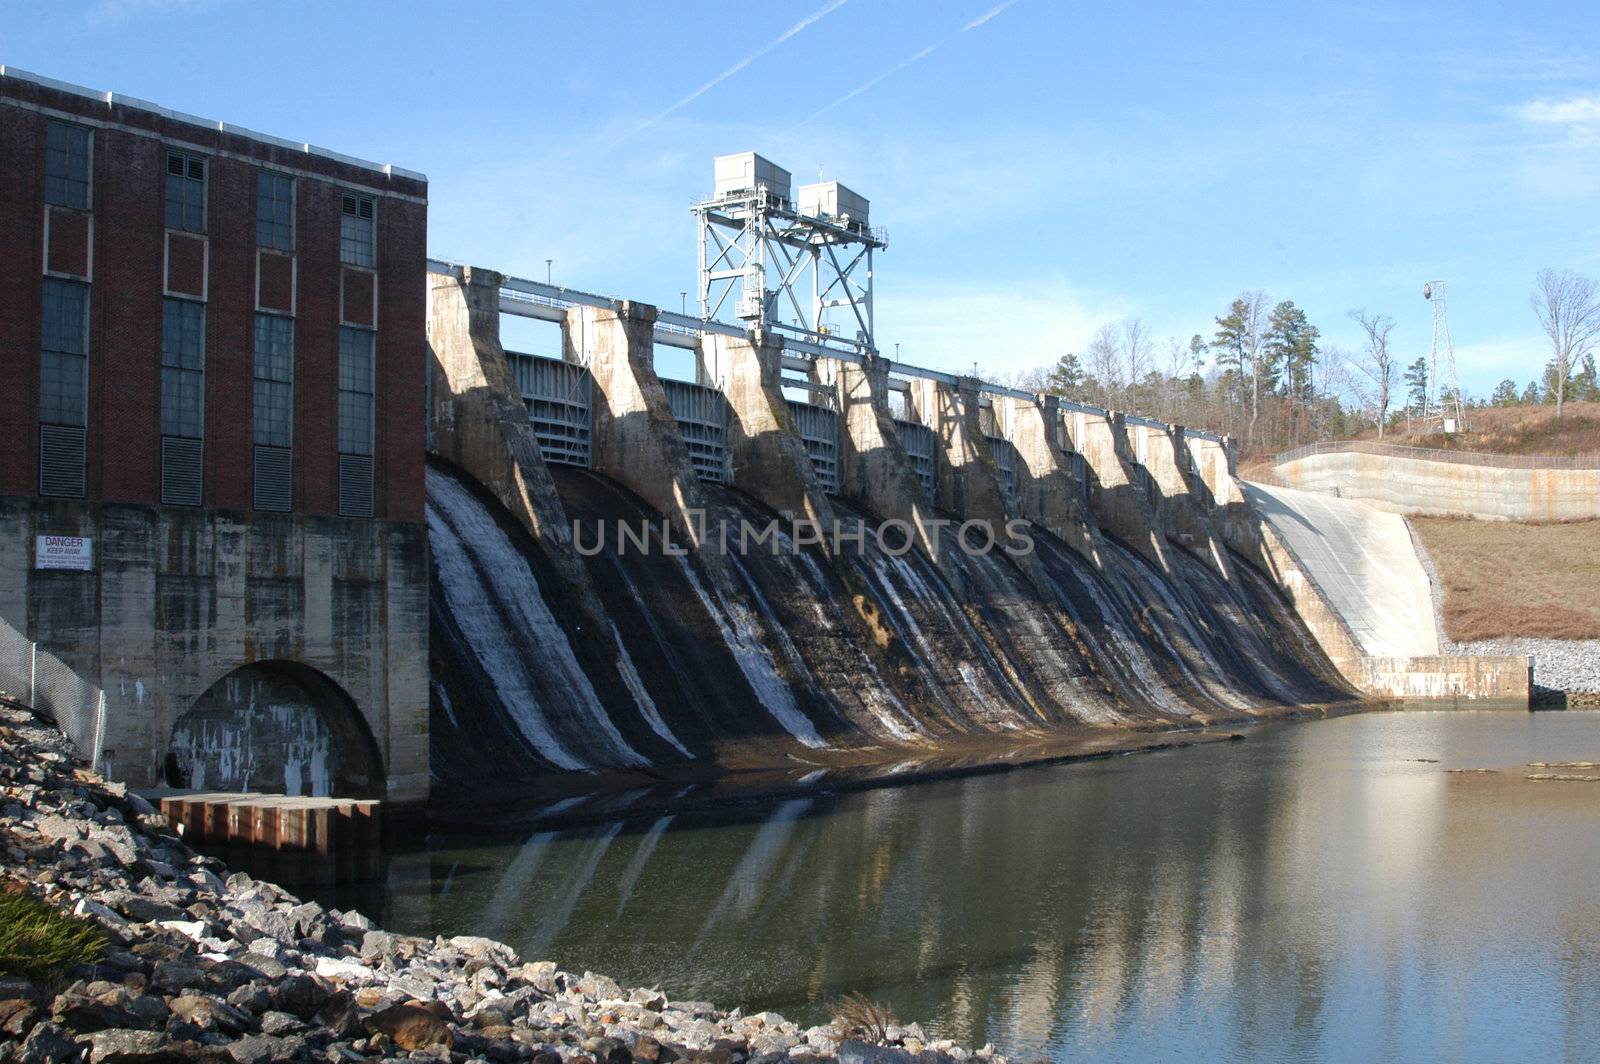 Dam along the river in North Carolina